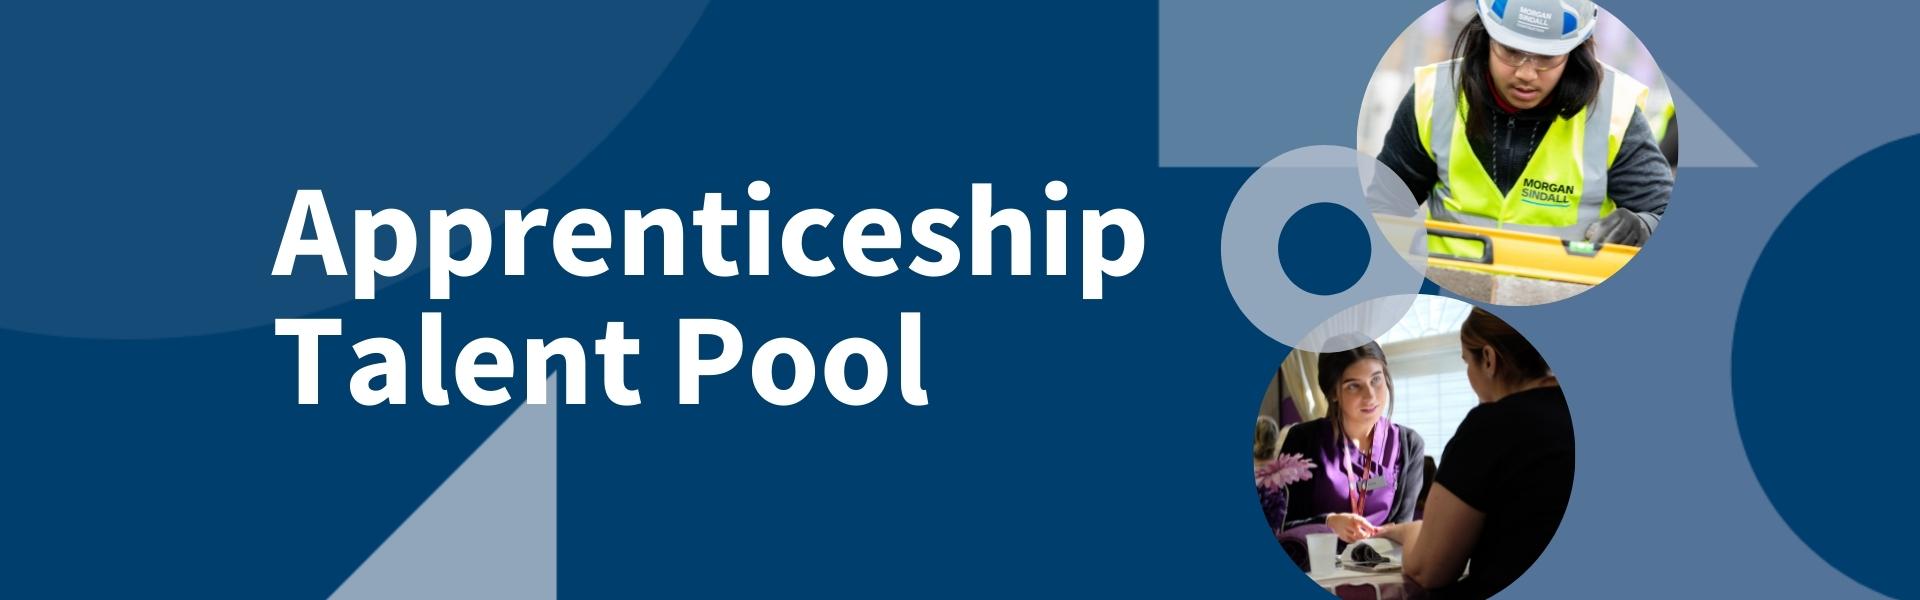 Apprenticeship Talent Pool